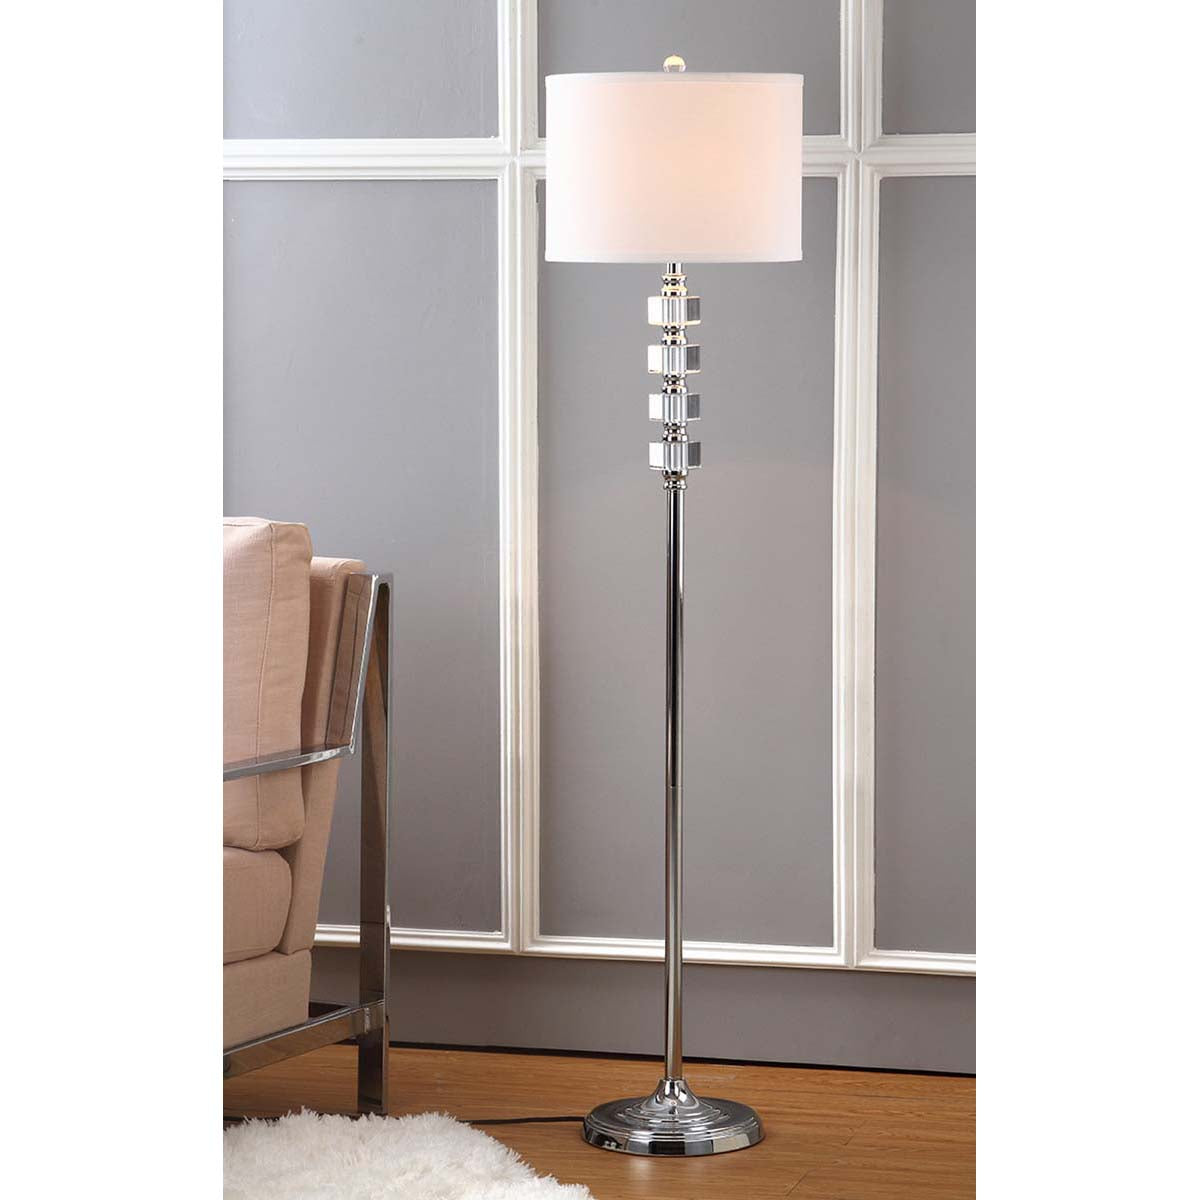 Safavieh Lombard 60 Inch H Street Floor Lamp, LIT4178 - Clear/Chrome